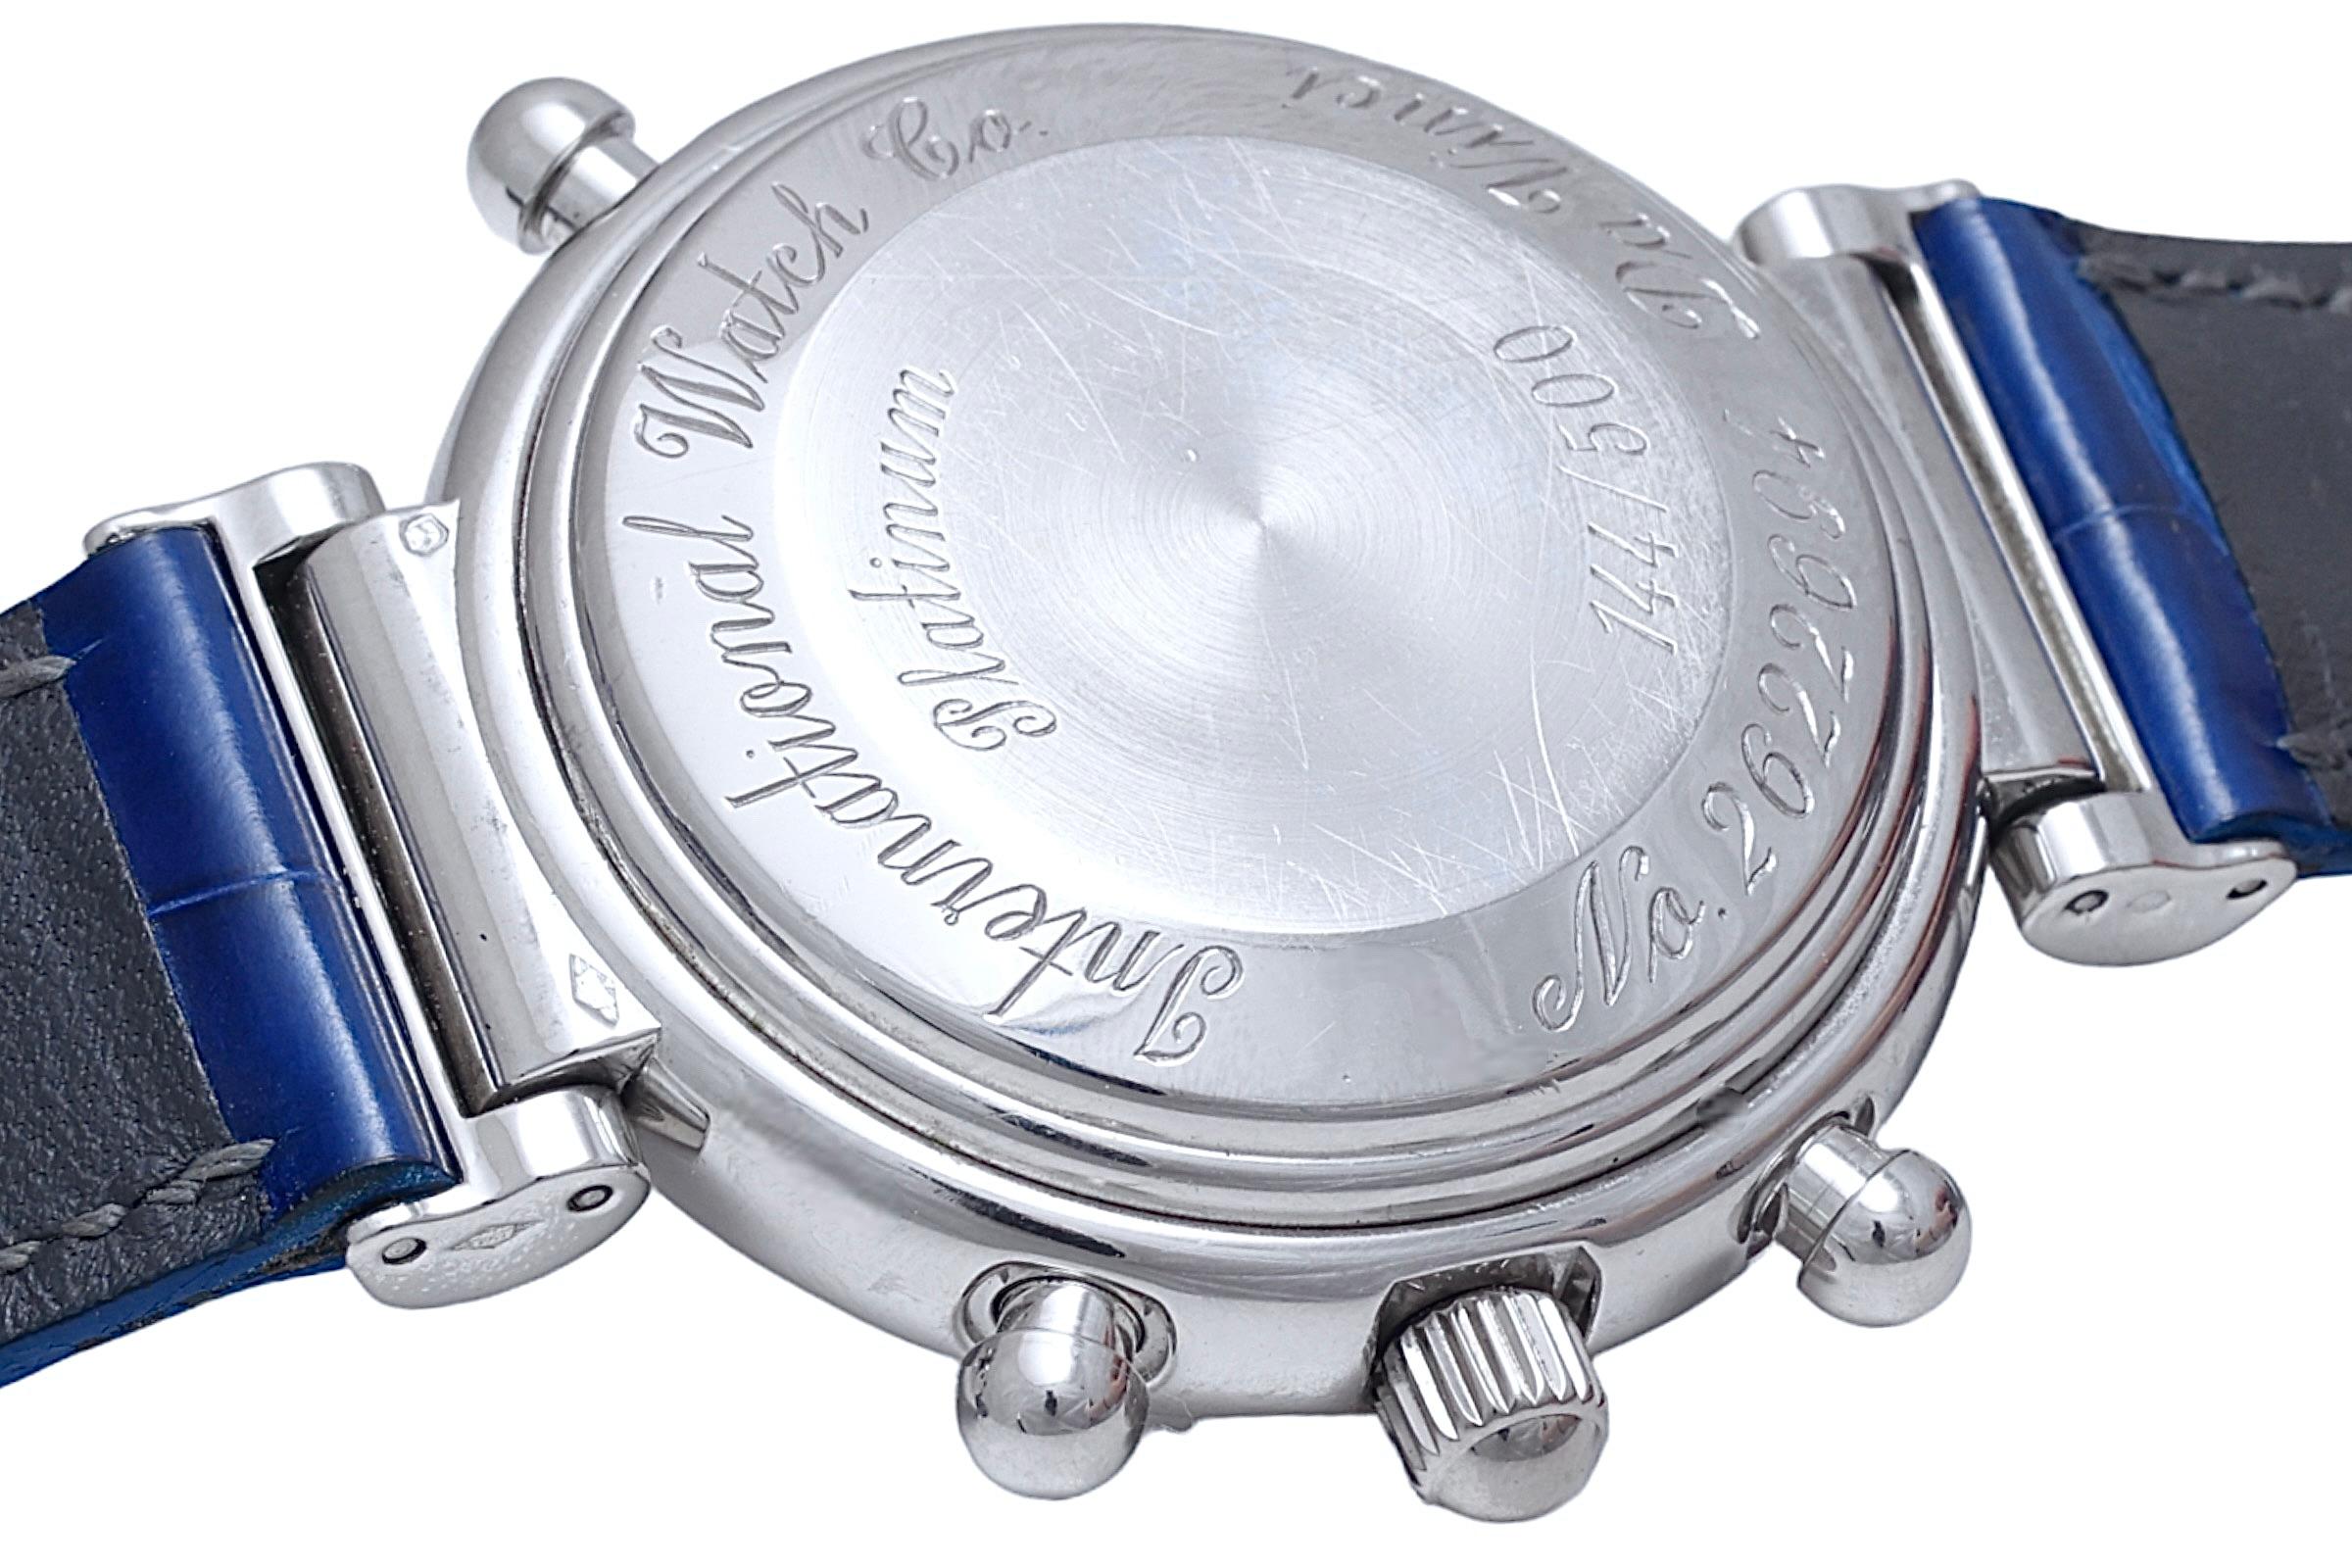 Platinum IWC Perpetual Calendar Split Second Chronograph Limited Wrist Watch3751 For Sale 7